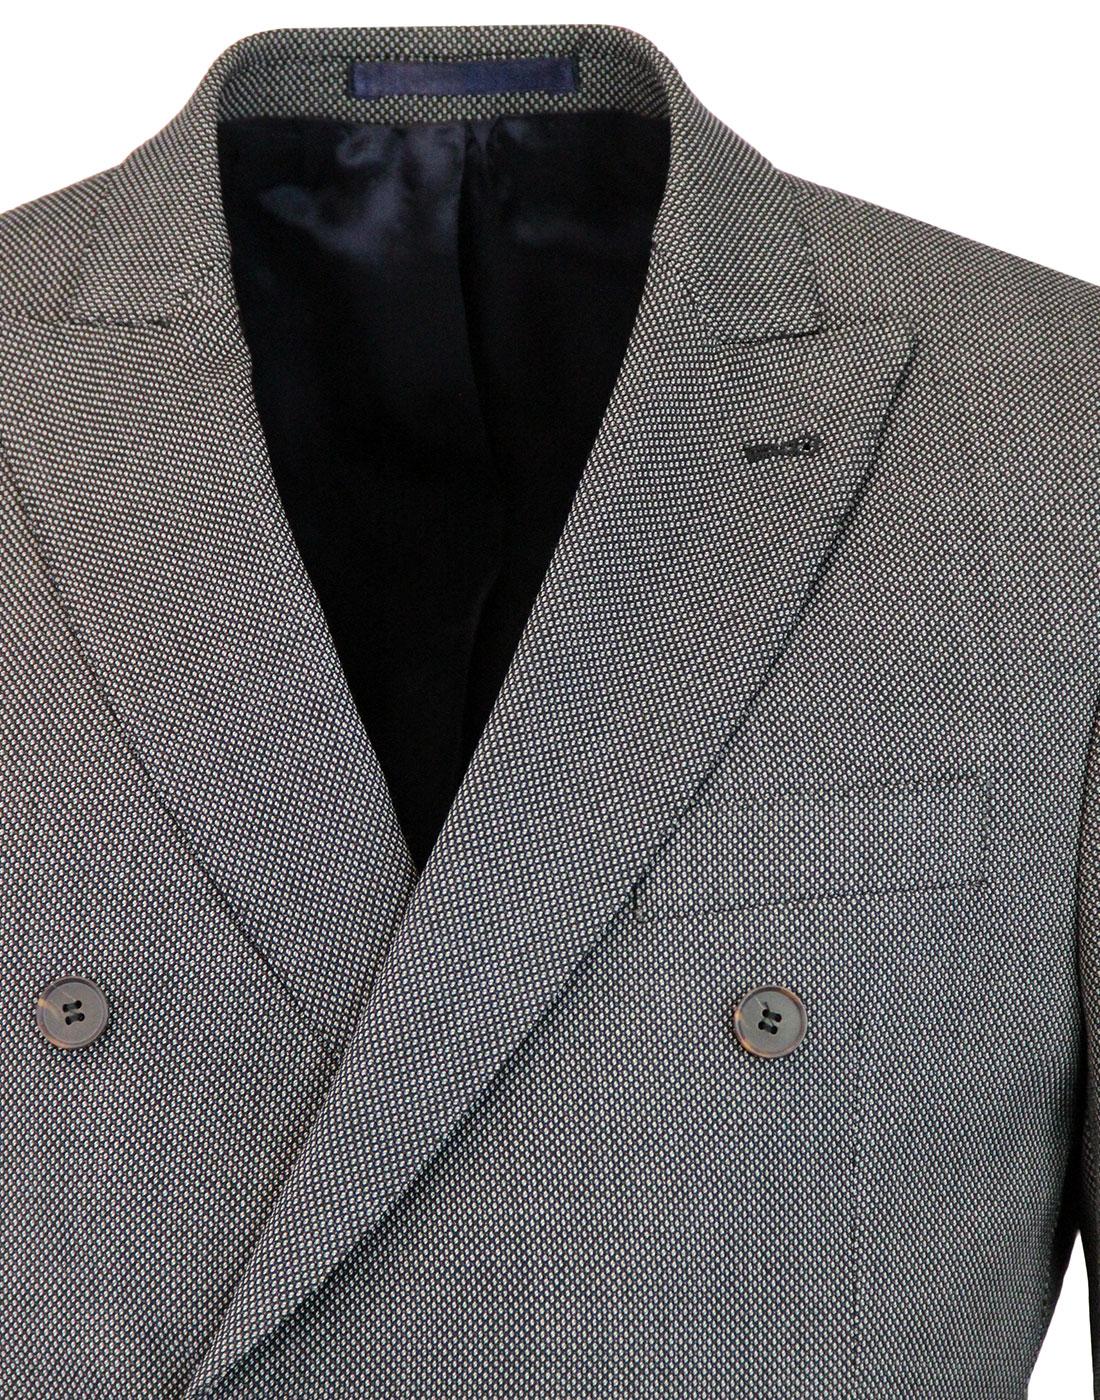 Men's Retro 1960s Mod Birdseye Check Double Breasted Suit Jacket